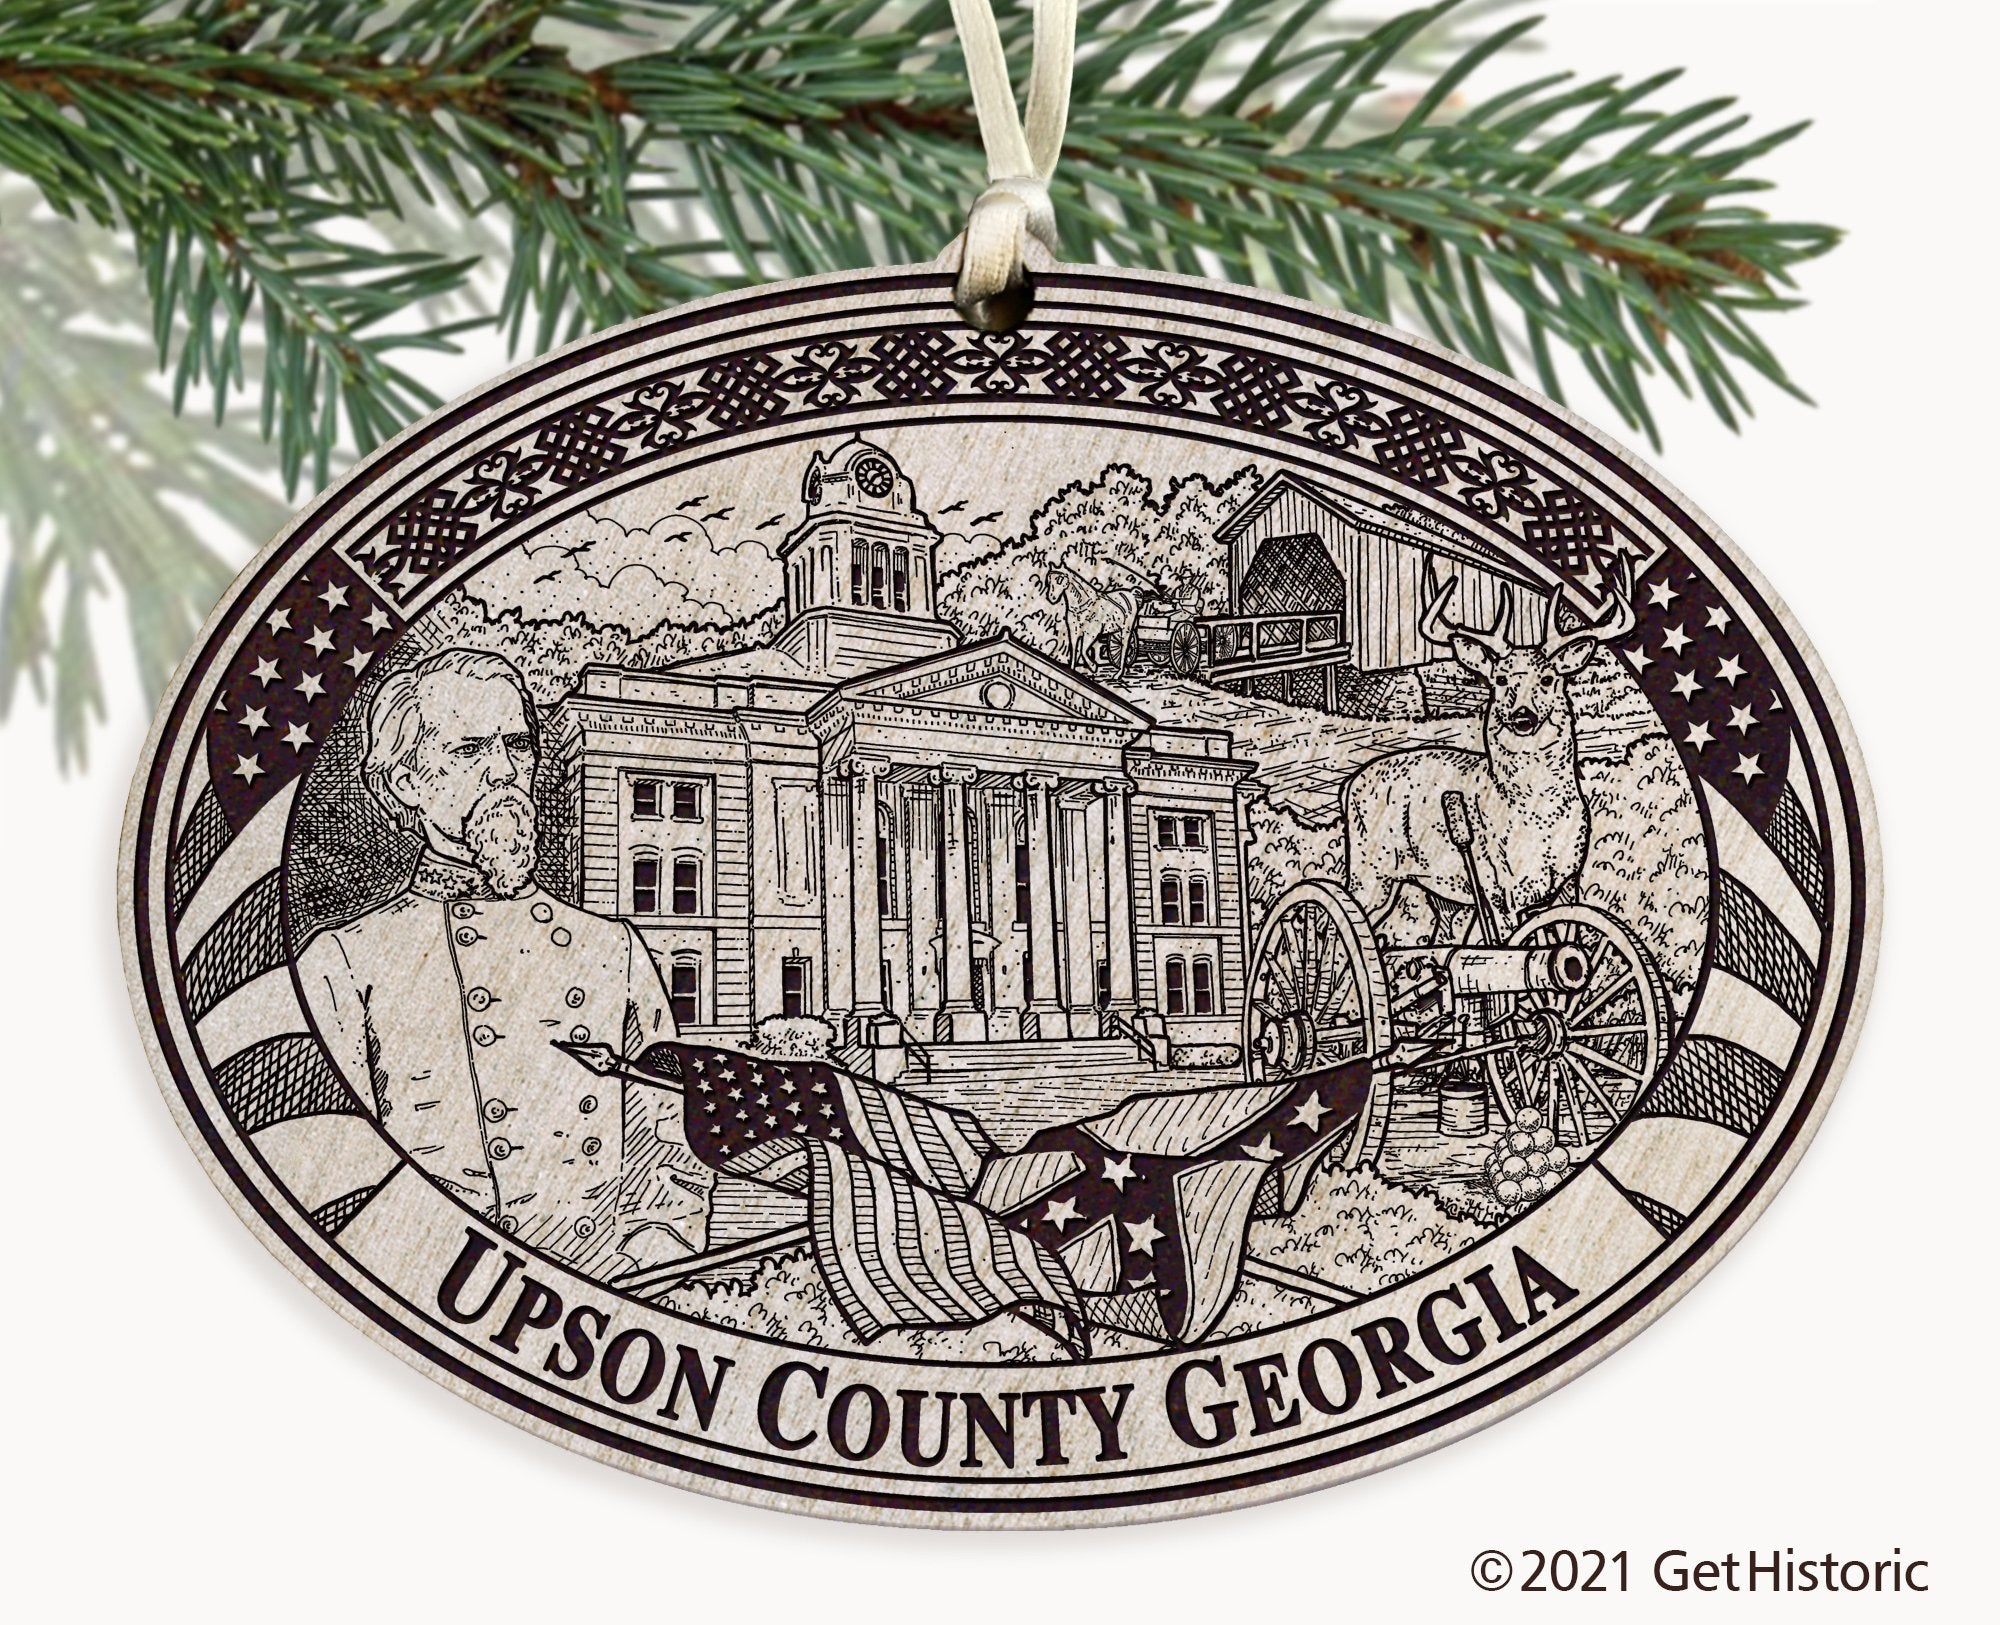 Upson County Georgia Engraved Ornament